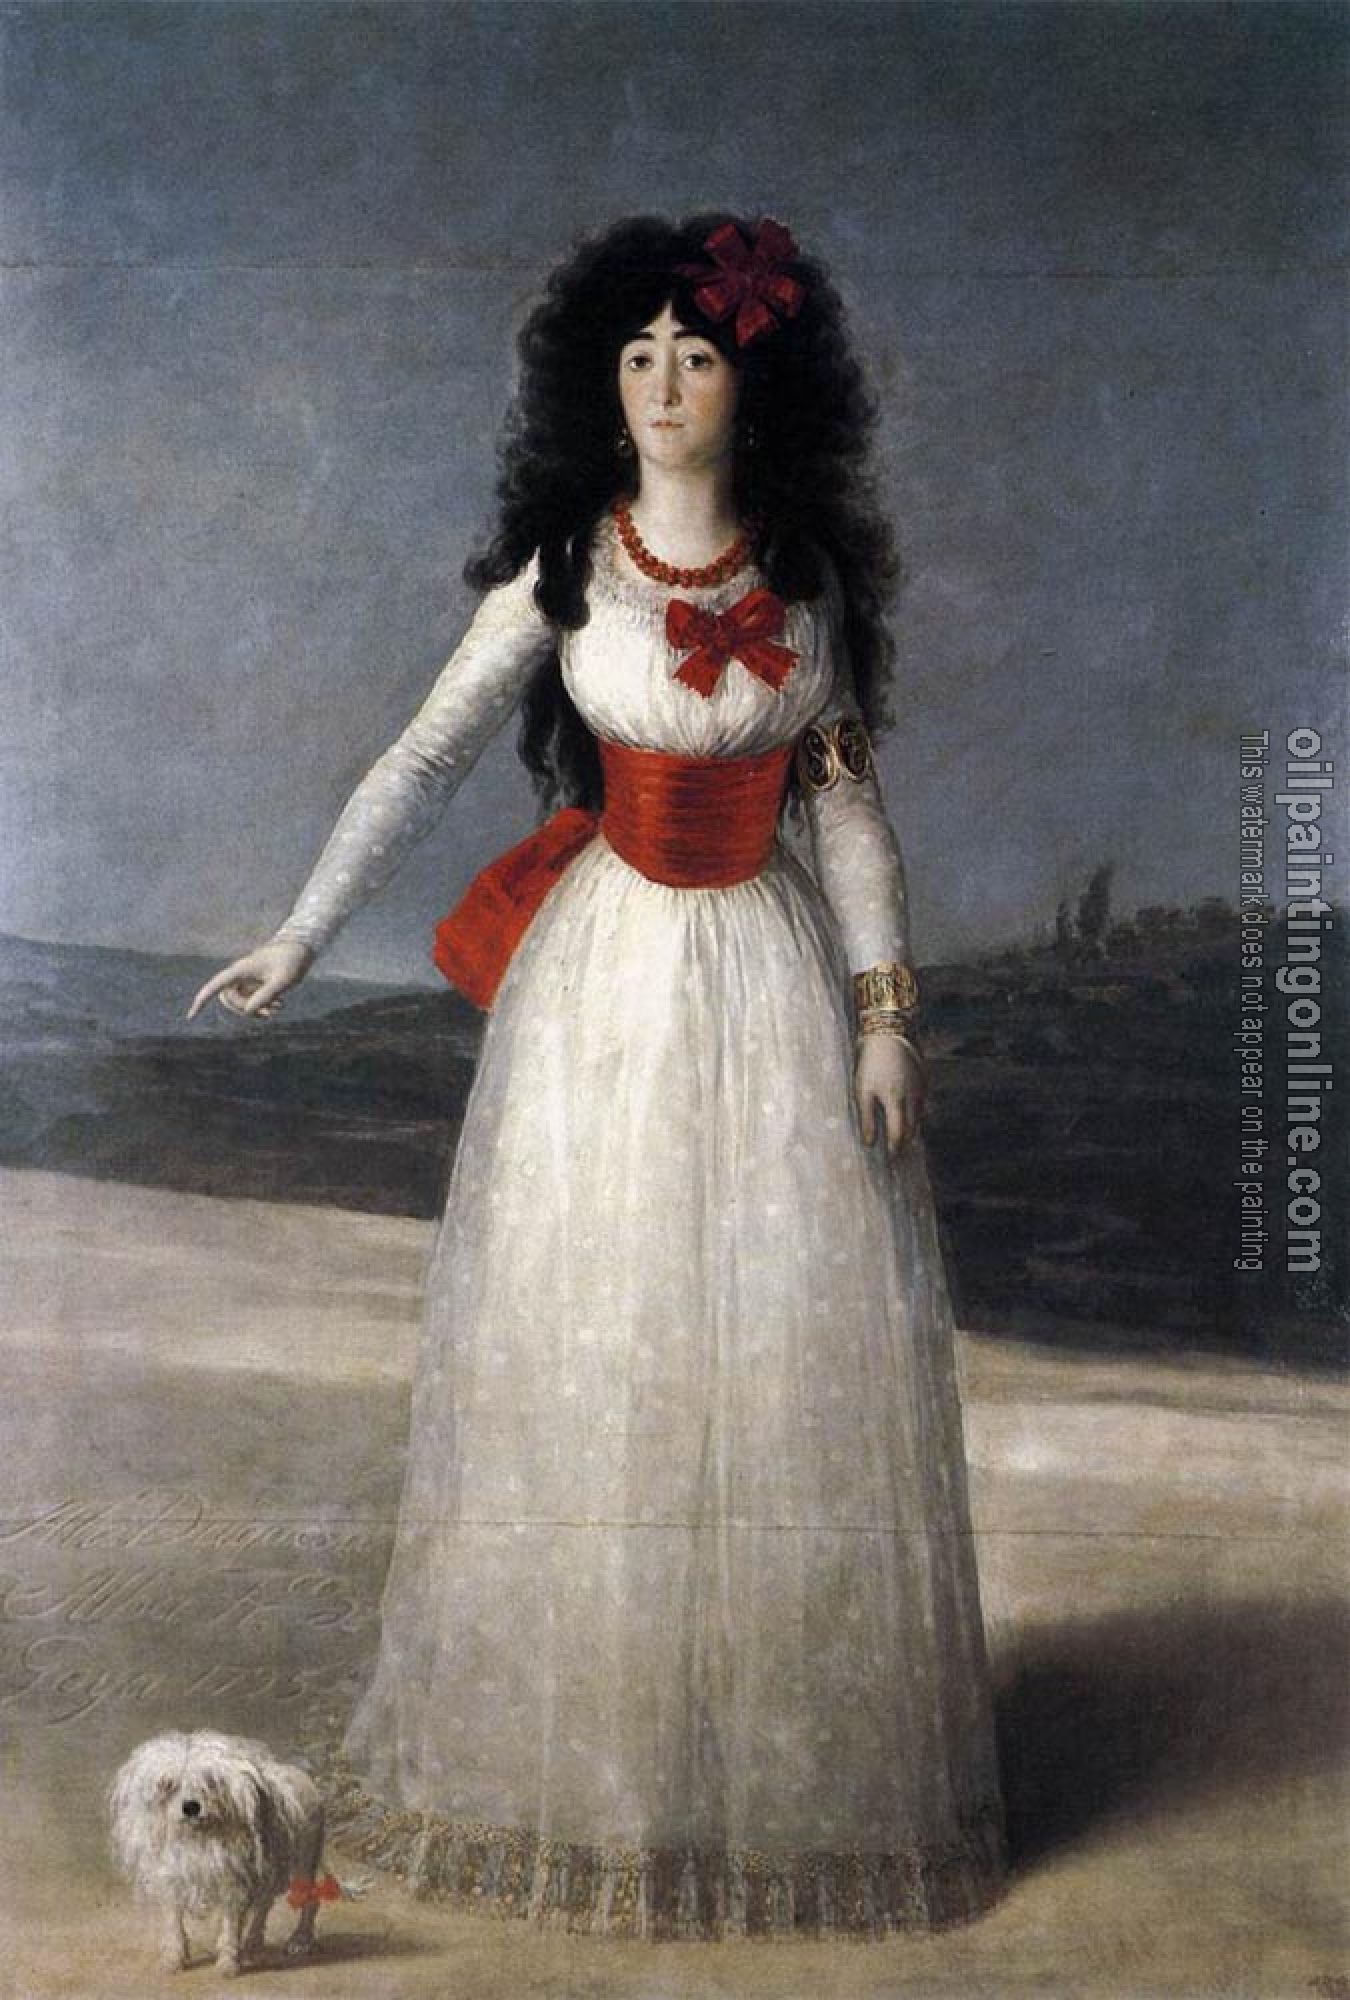 Goya, Francisco de - The Duchess of Alba